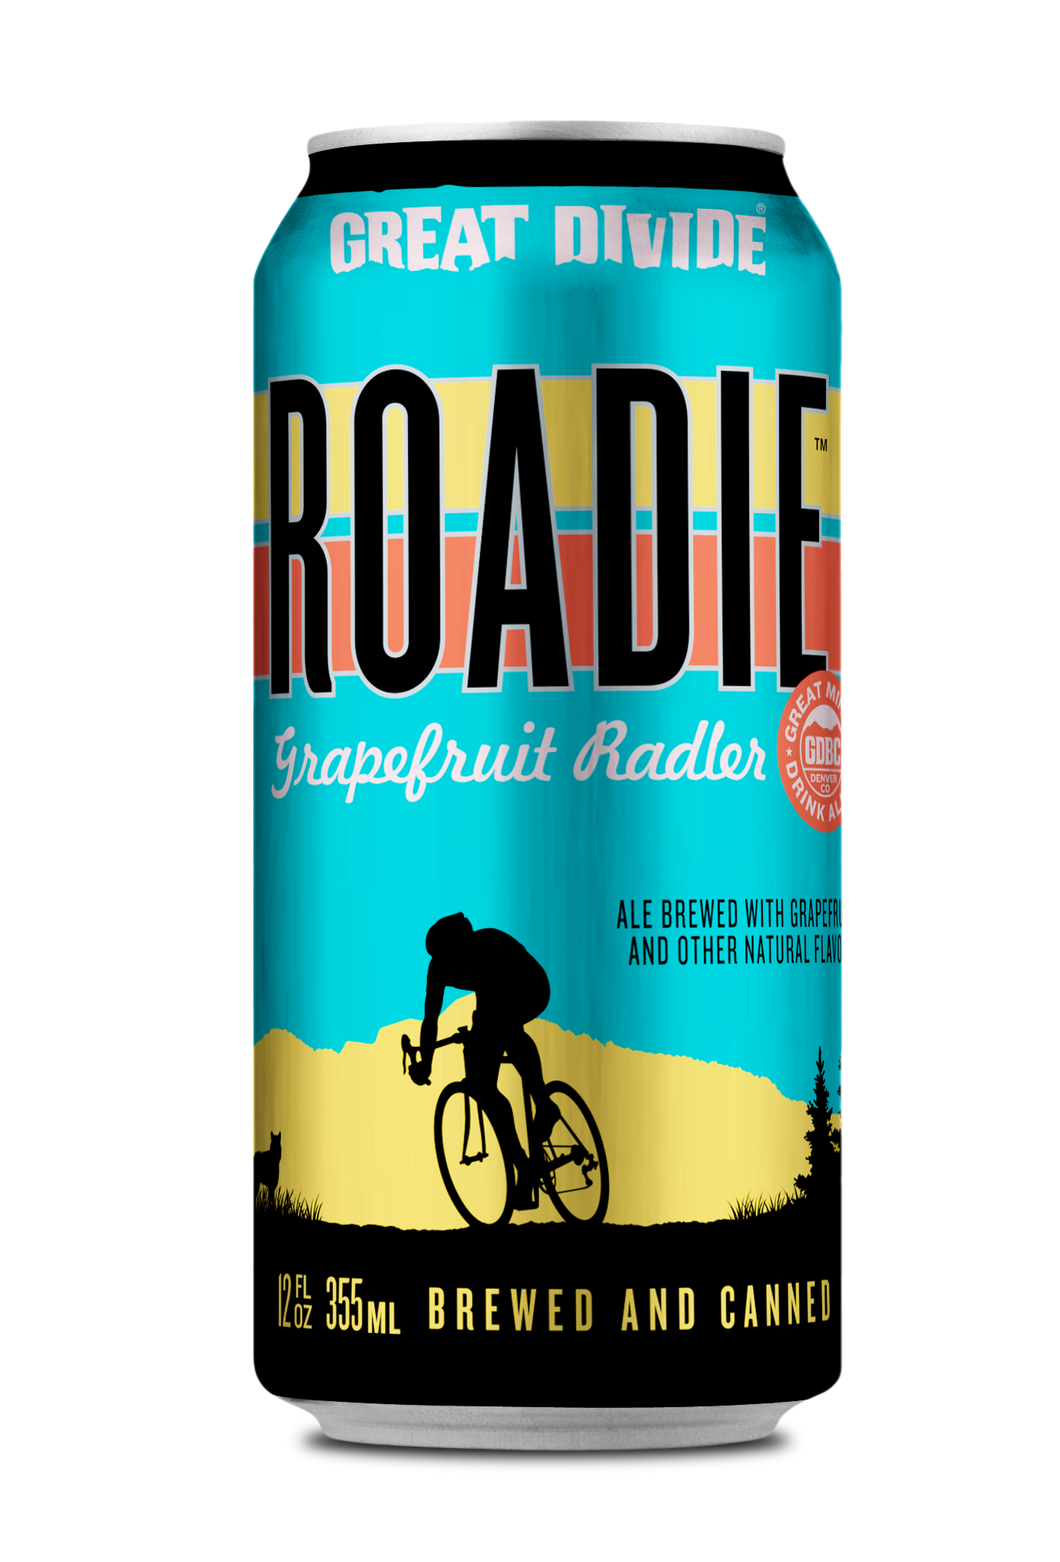 Roadie Grapefruit Radler - Great Divide Brewing Co - 12 oz can